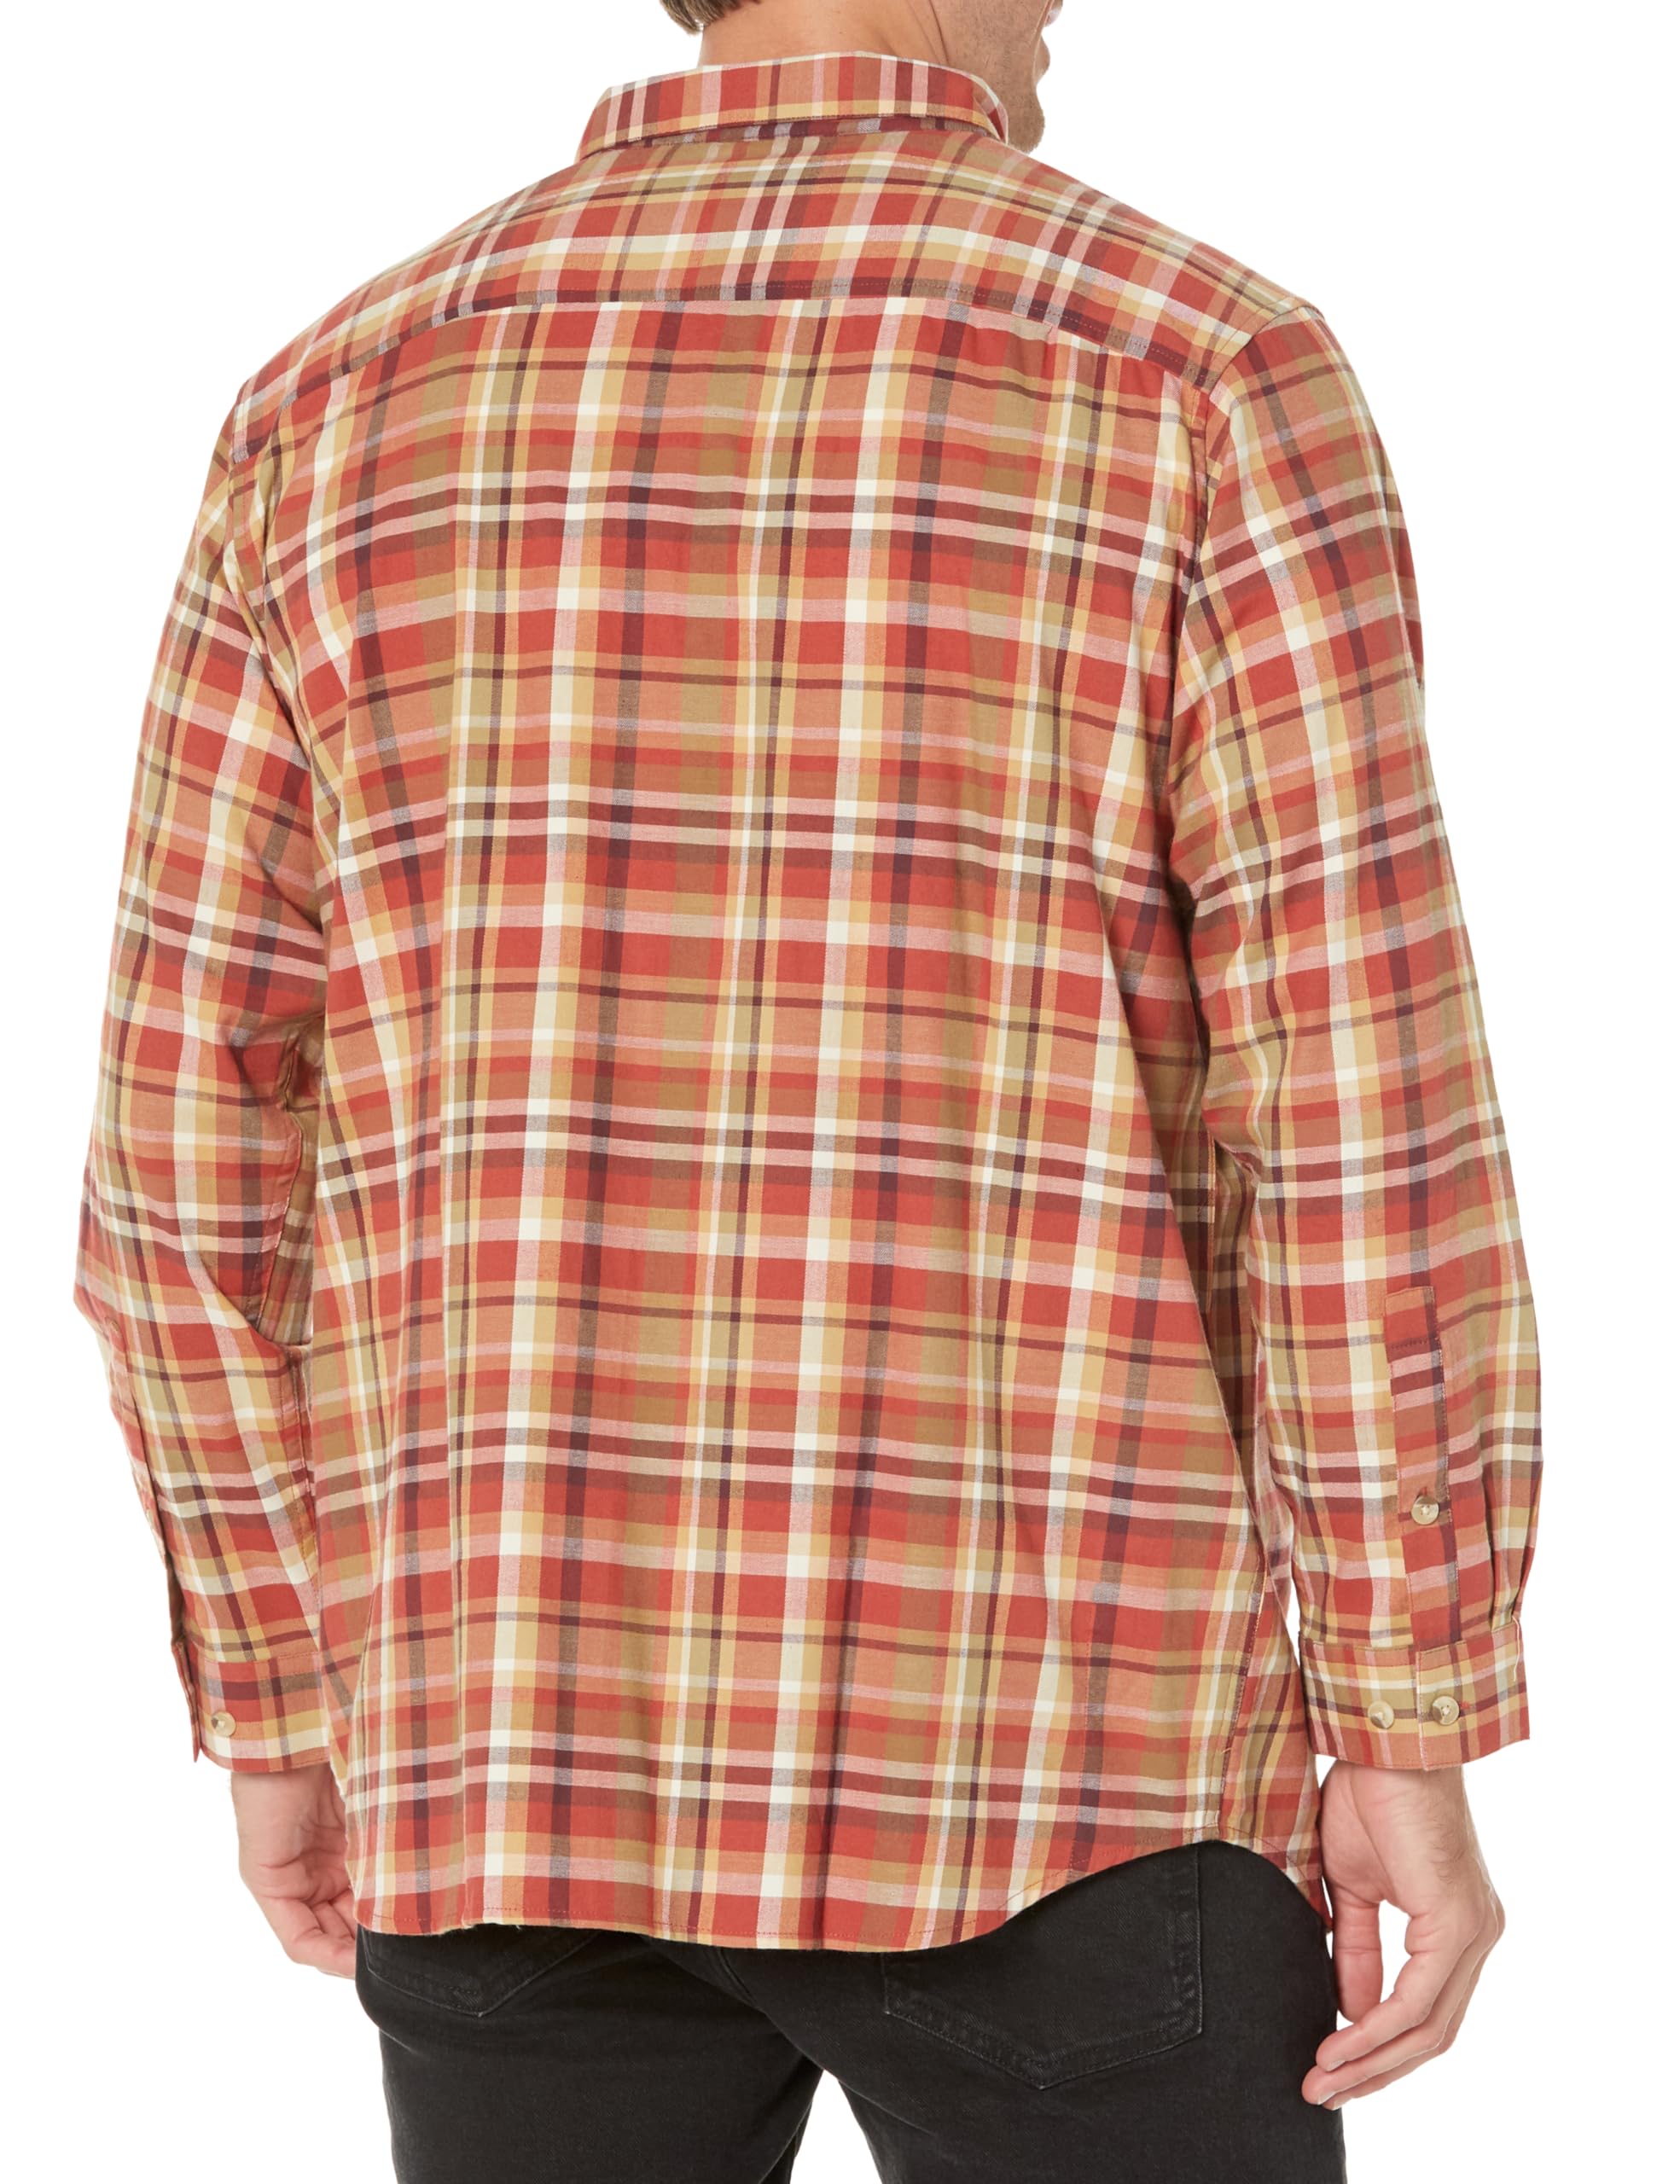 Columbia Men's Vapor Ridge III Long Sleeve Shirt, Warp Red Bright Bold Plaid, 2X Tall